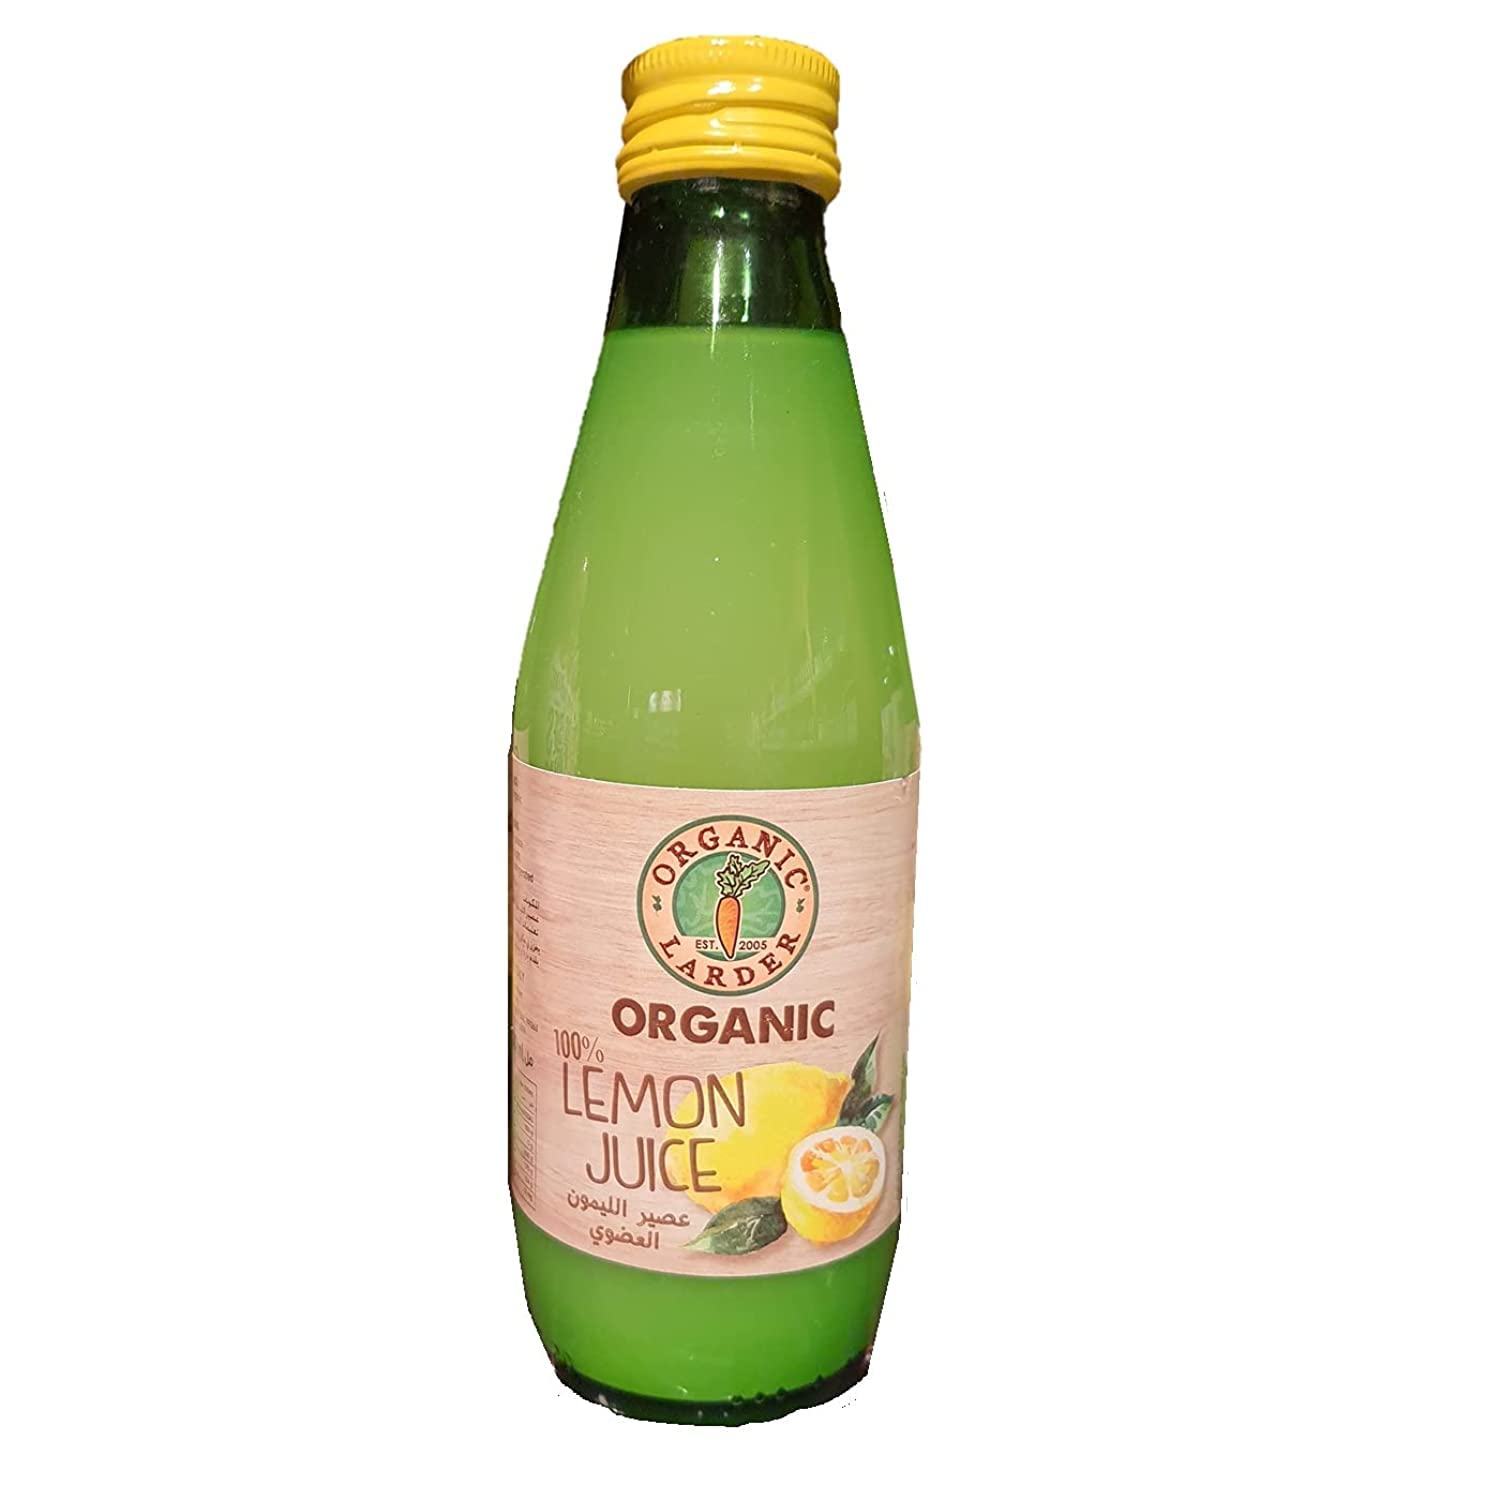 ORGANIC LARDER 100% Lemon Juice, 250ml - Organic, Vegan, Gluten Free